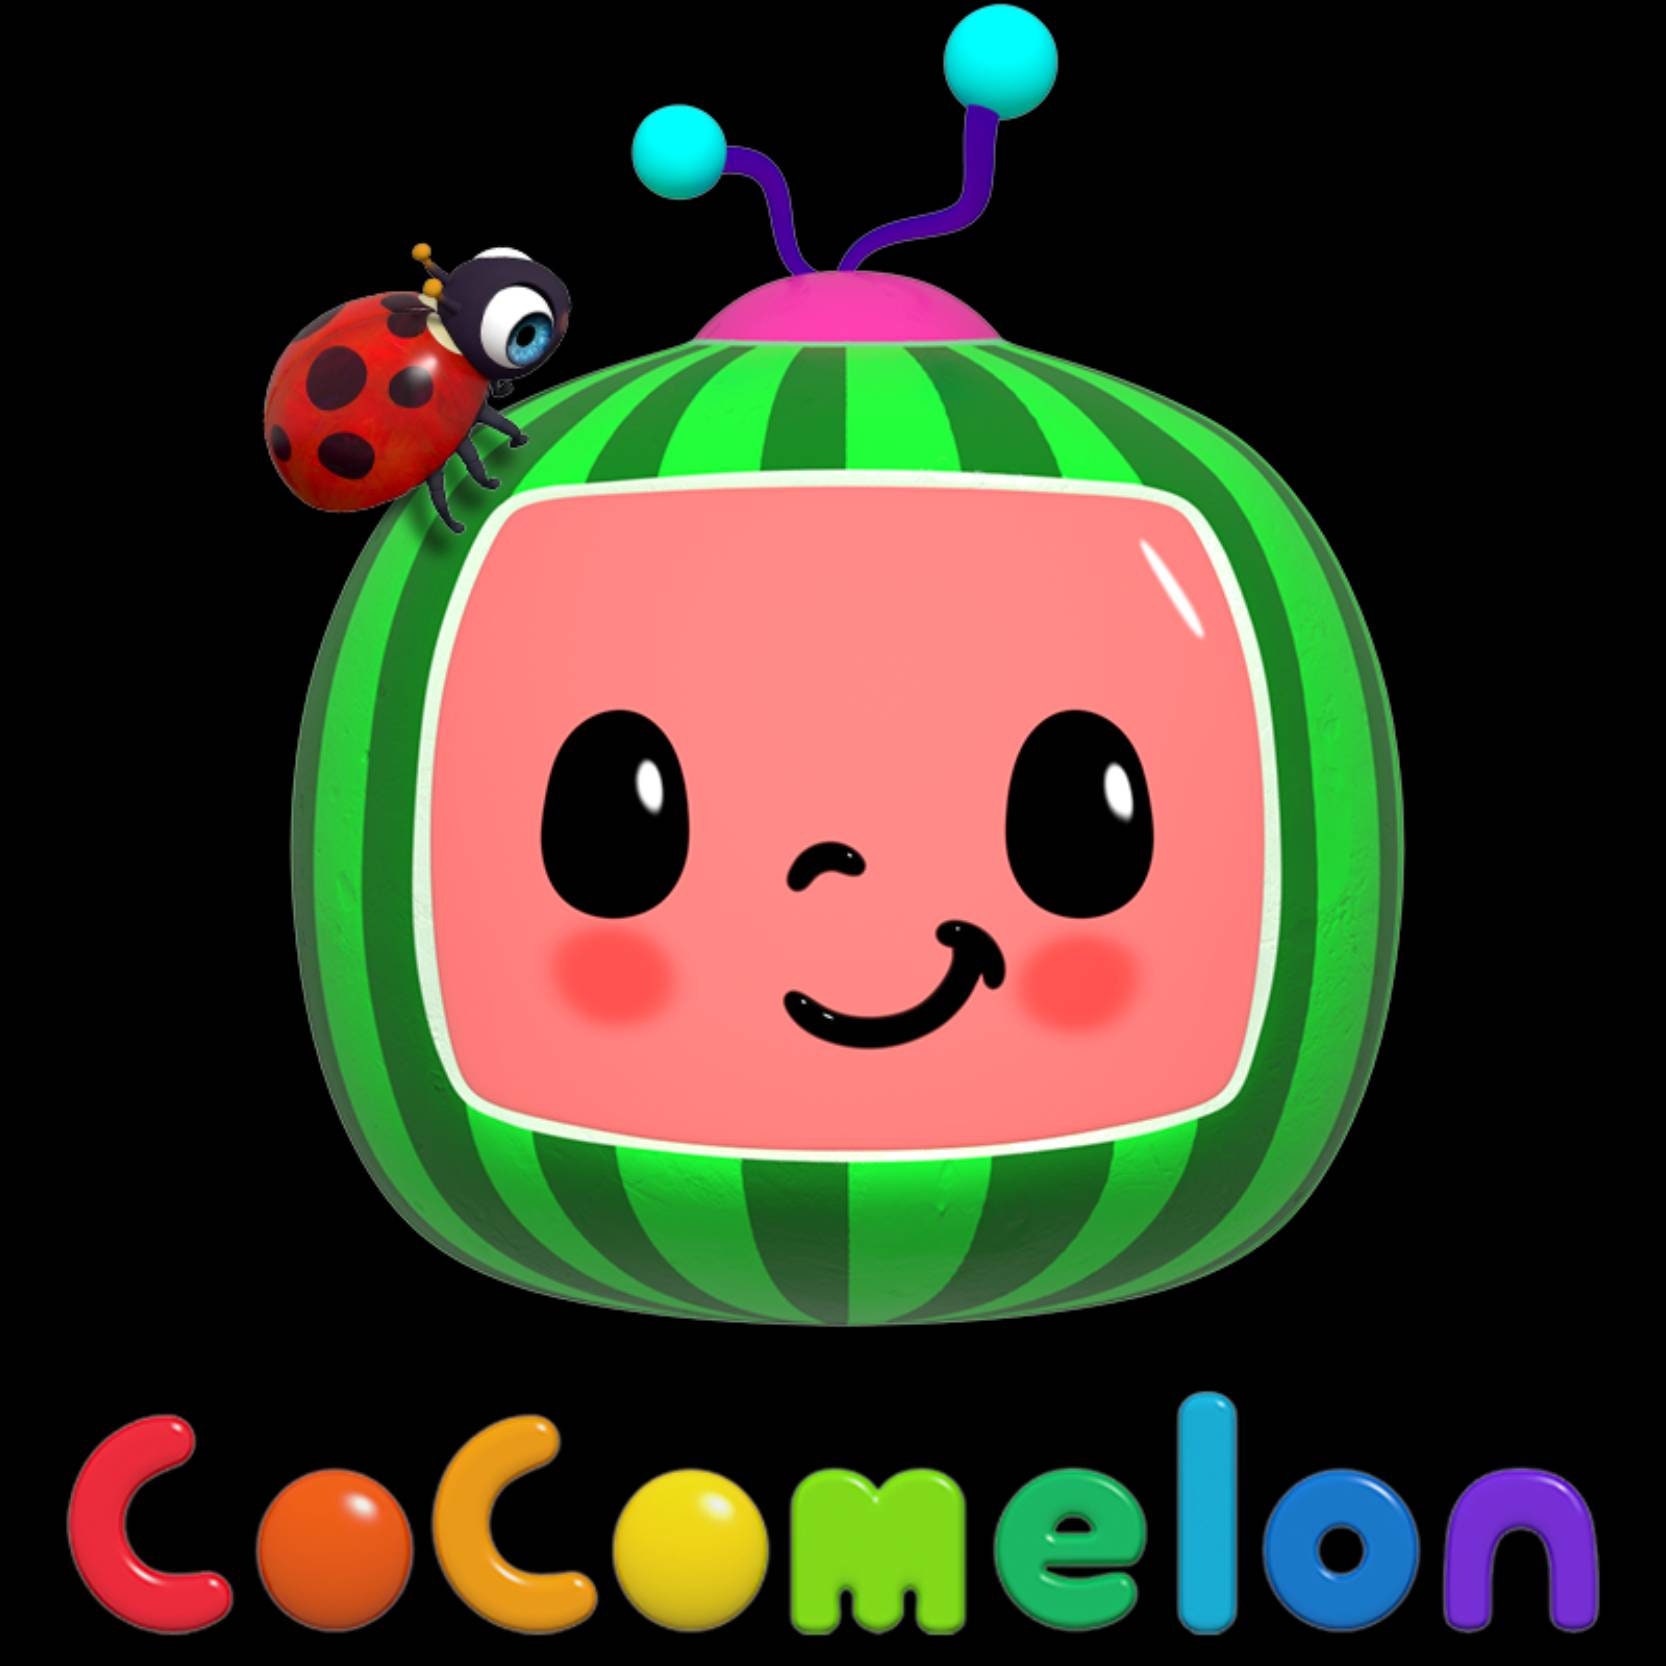 Coco melon character | Etsy